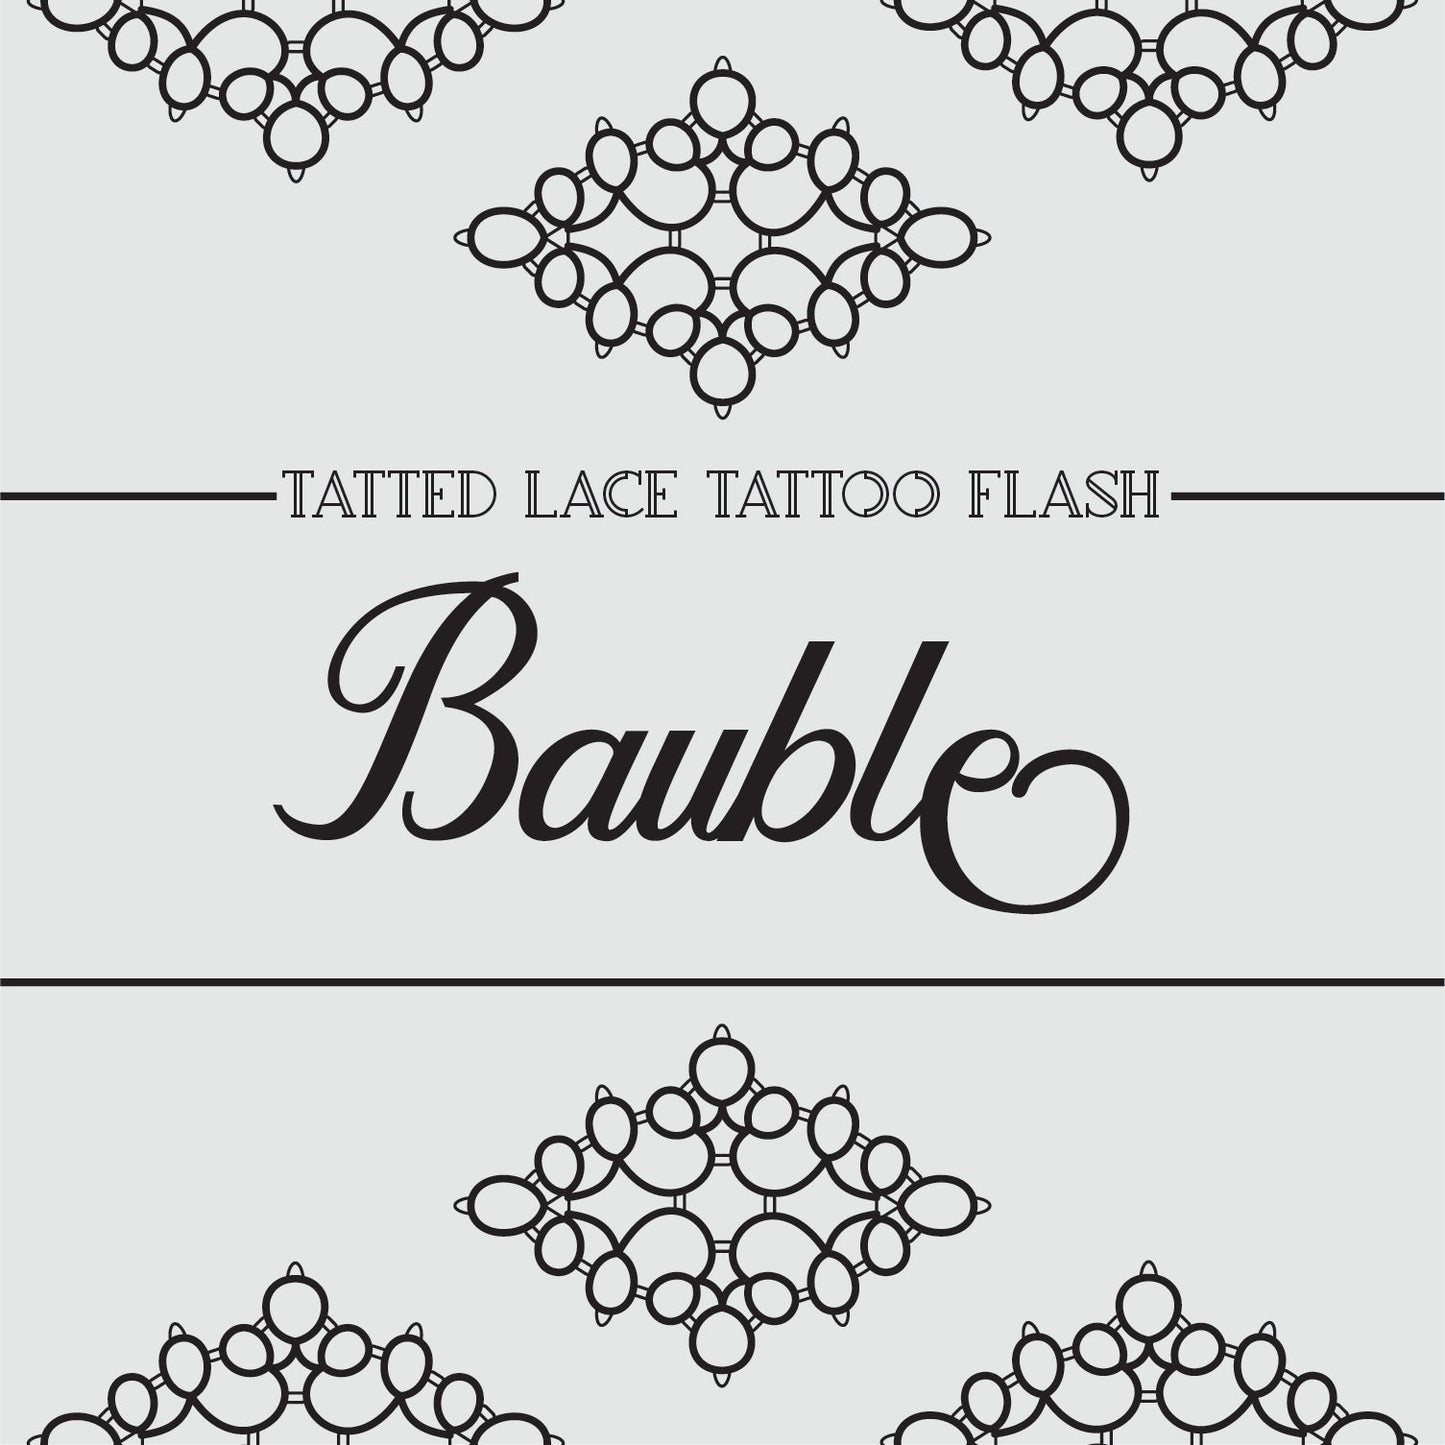 Bauble Tattoo Flash & Permissions